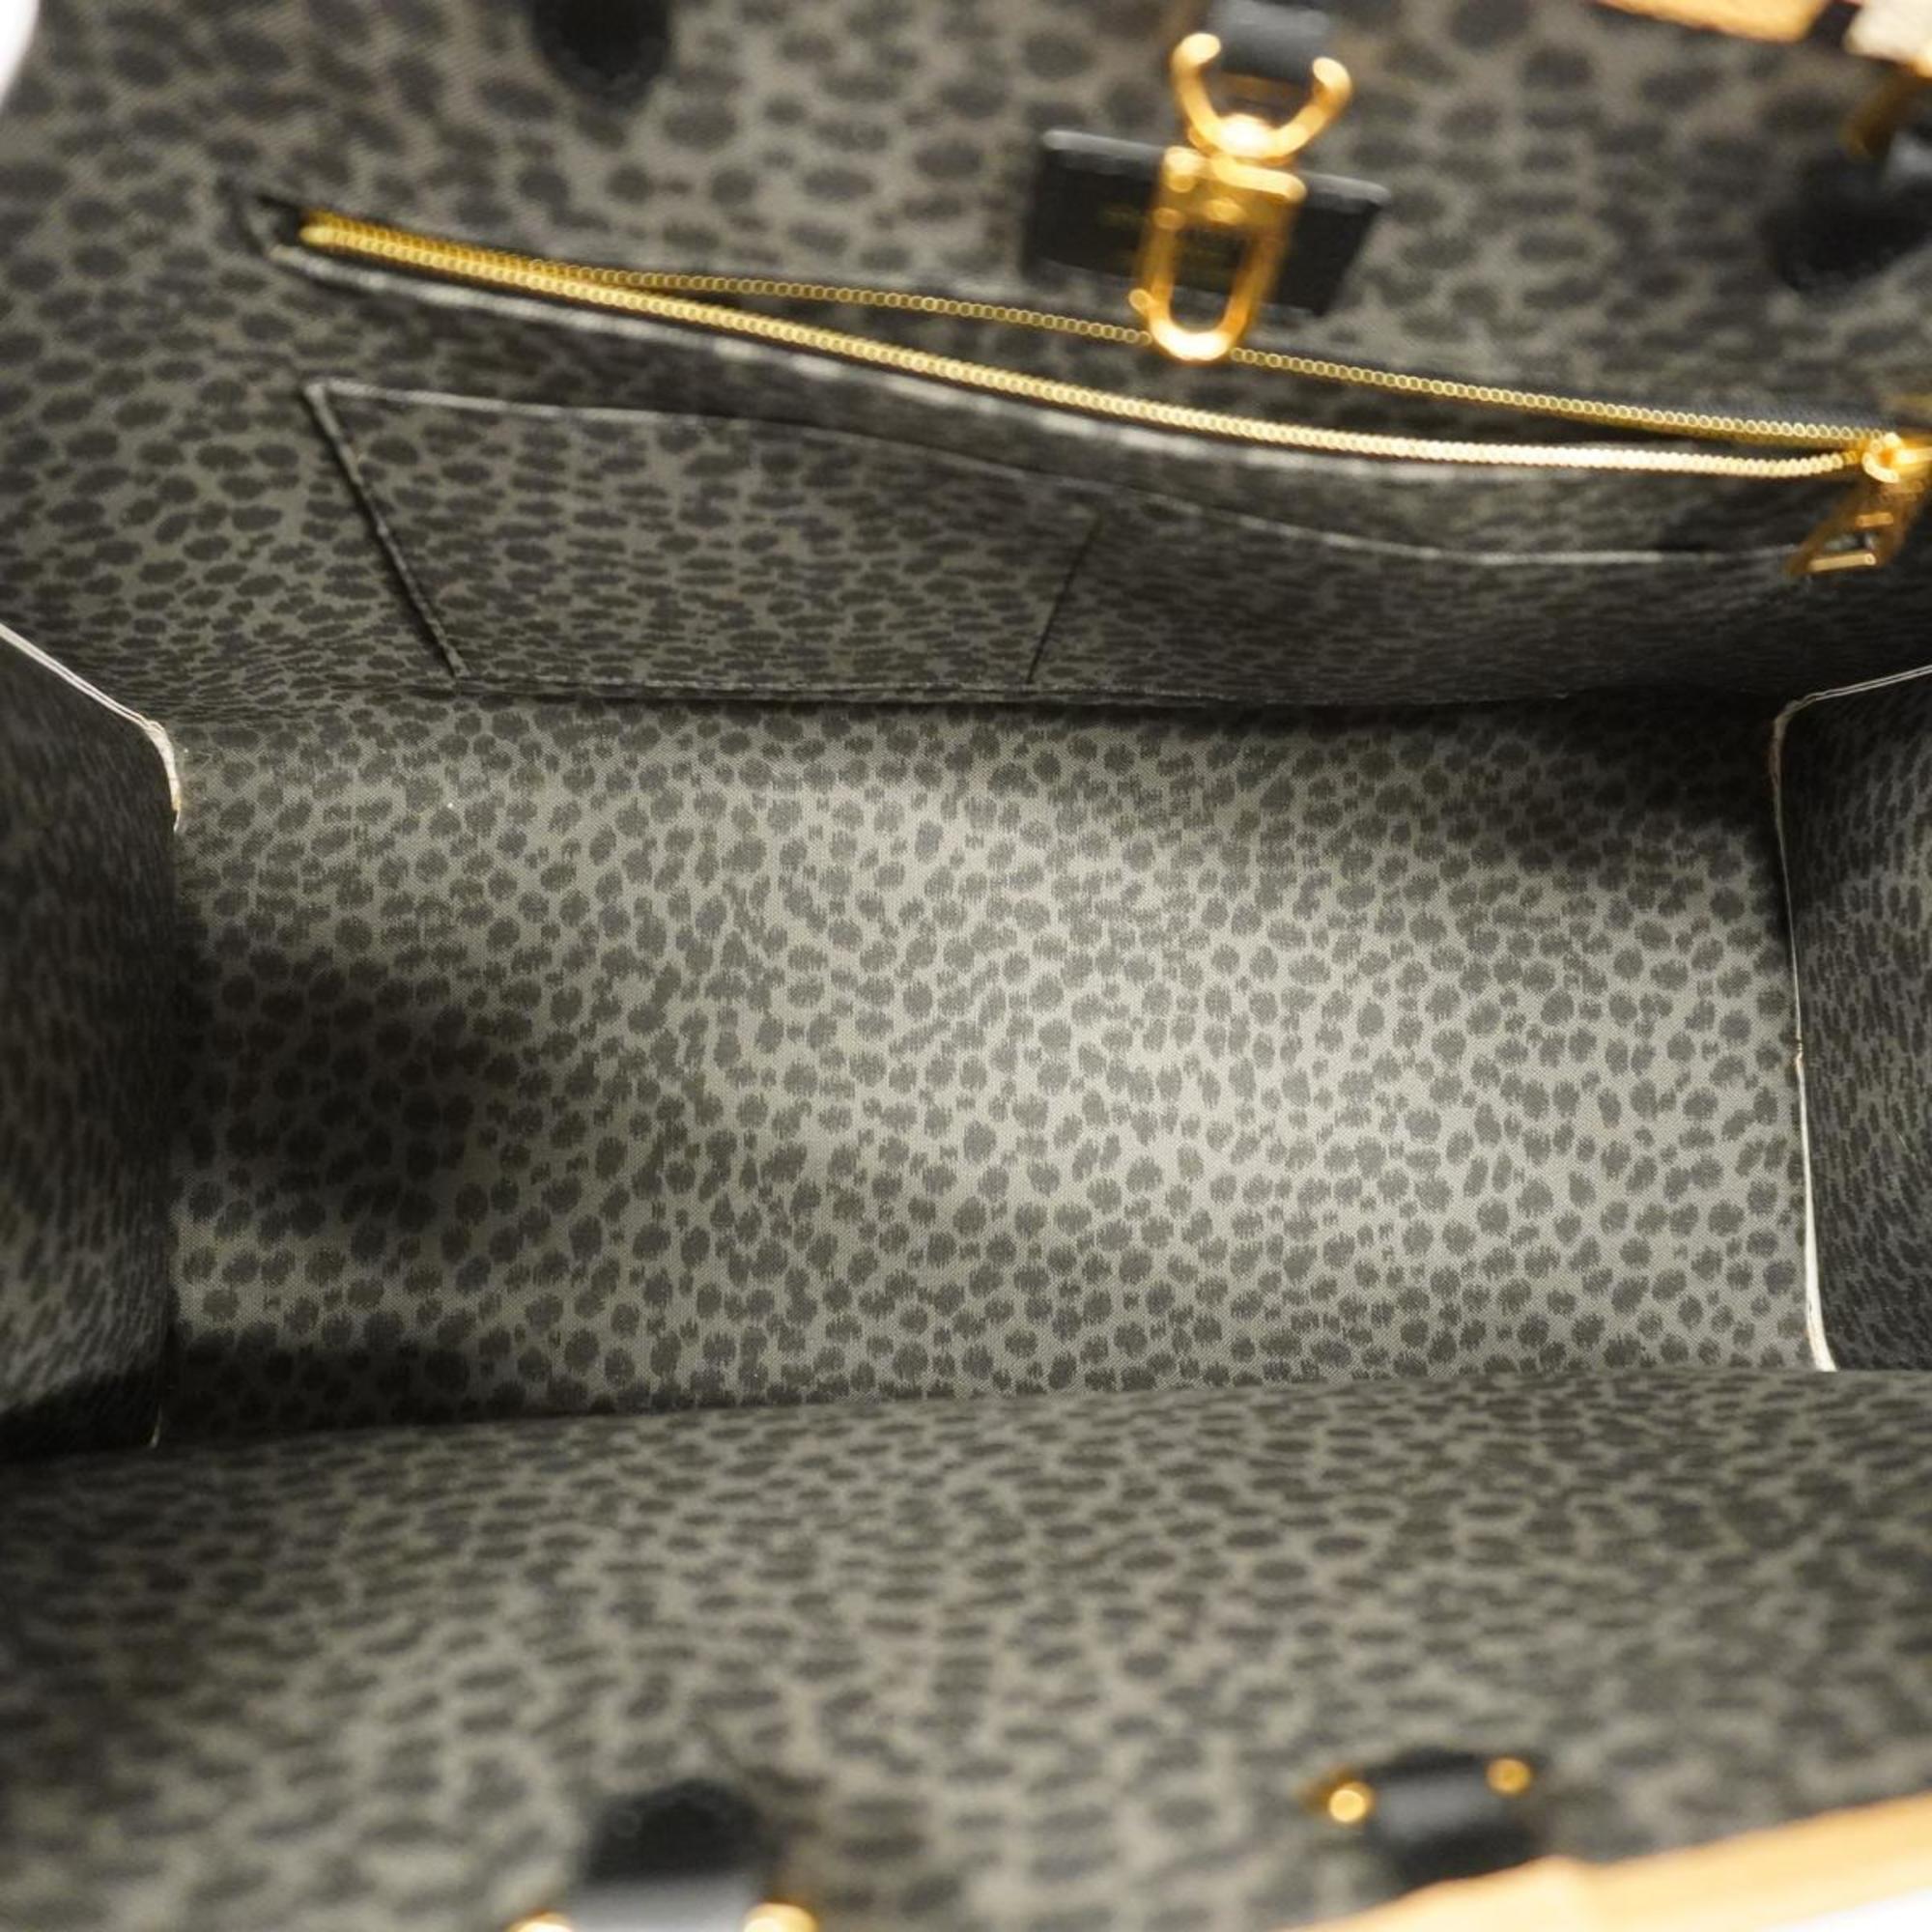 Louis Vuitton Handbag Monogram Wild at Heart On the Go GM M45814 Arizona Beige Women's